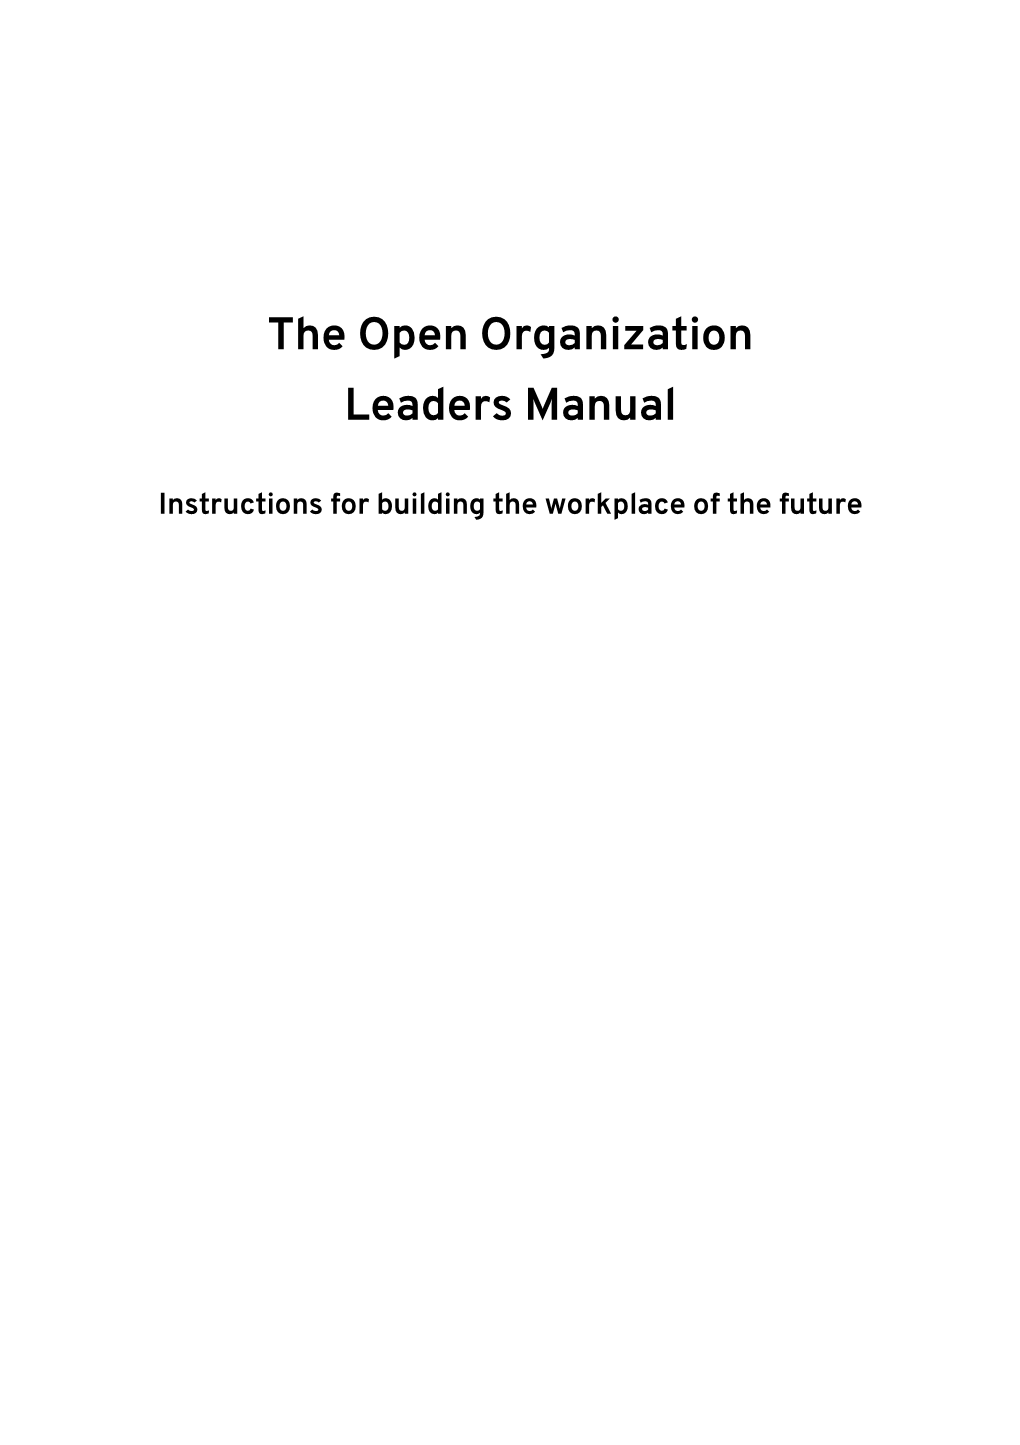 The Open Organization Leaders Manual